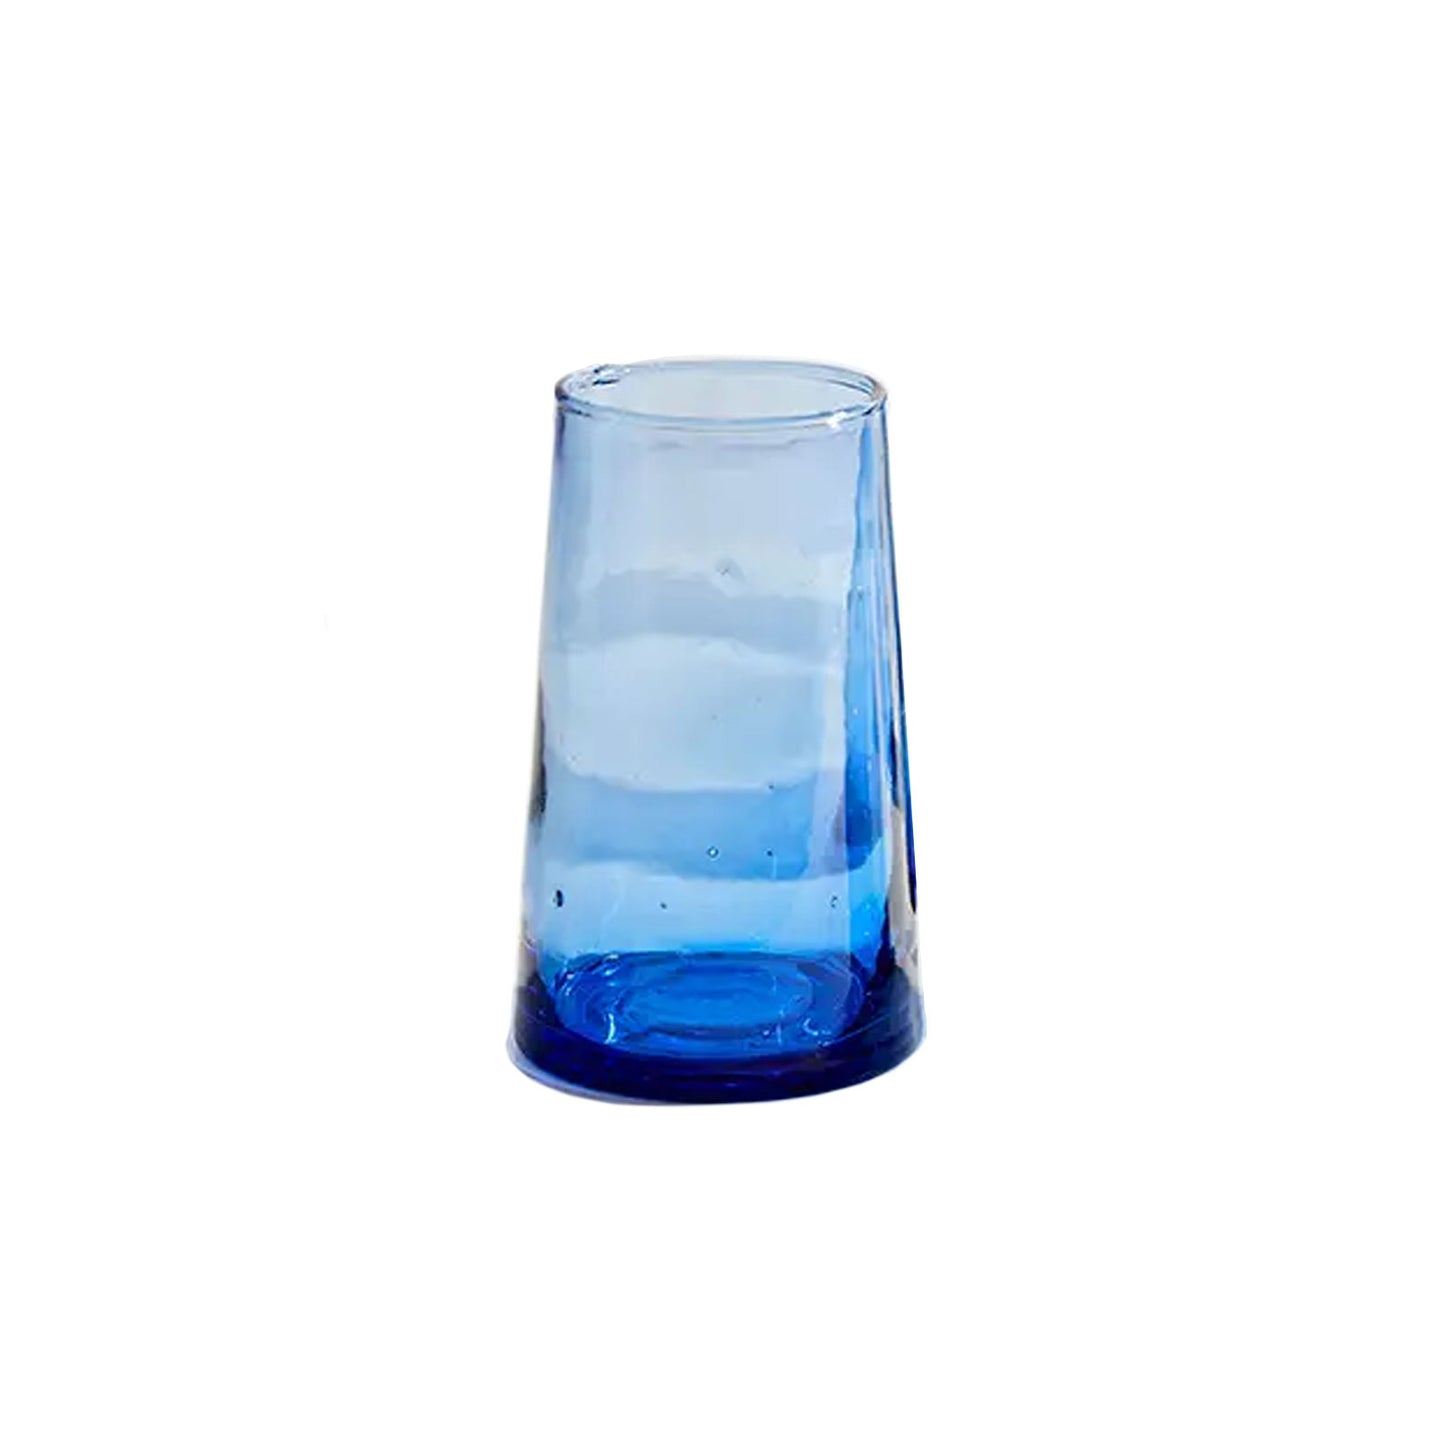 Moroccan Cone Glassware in Blue, Large